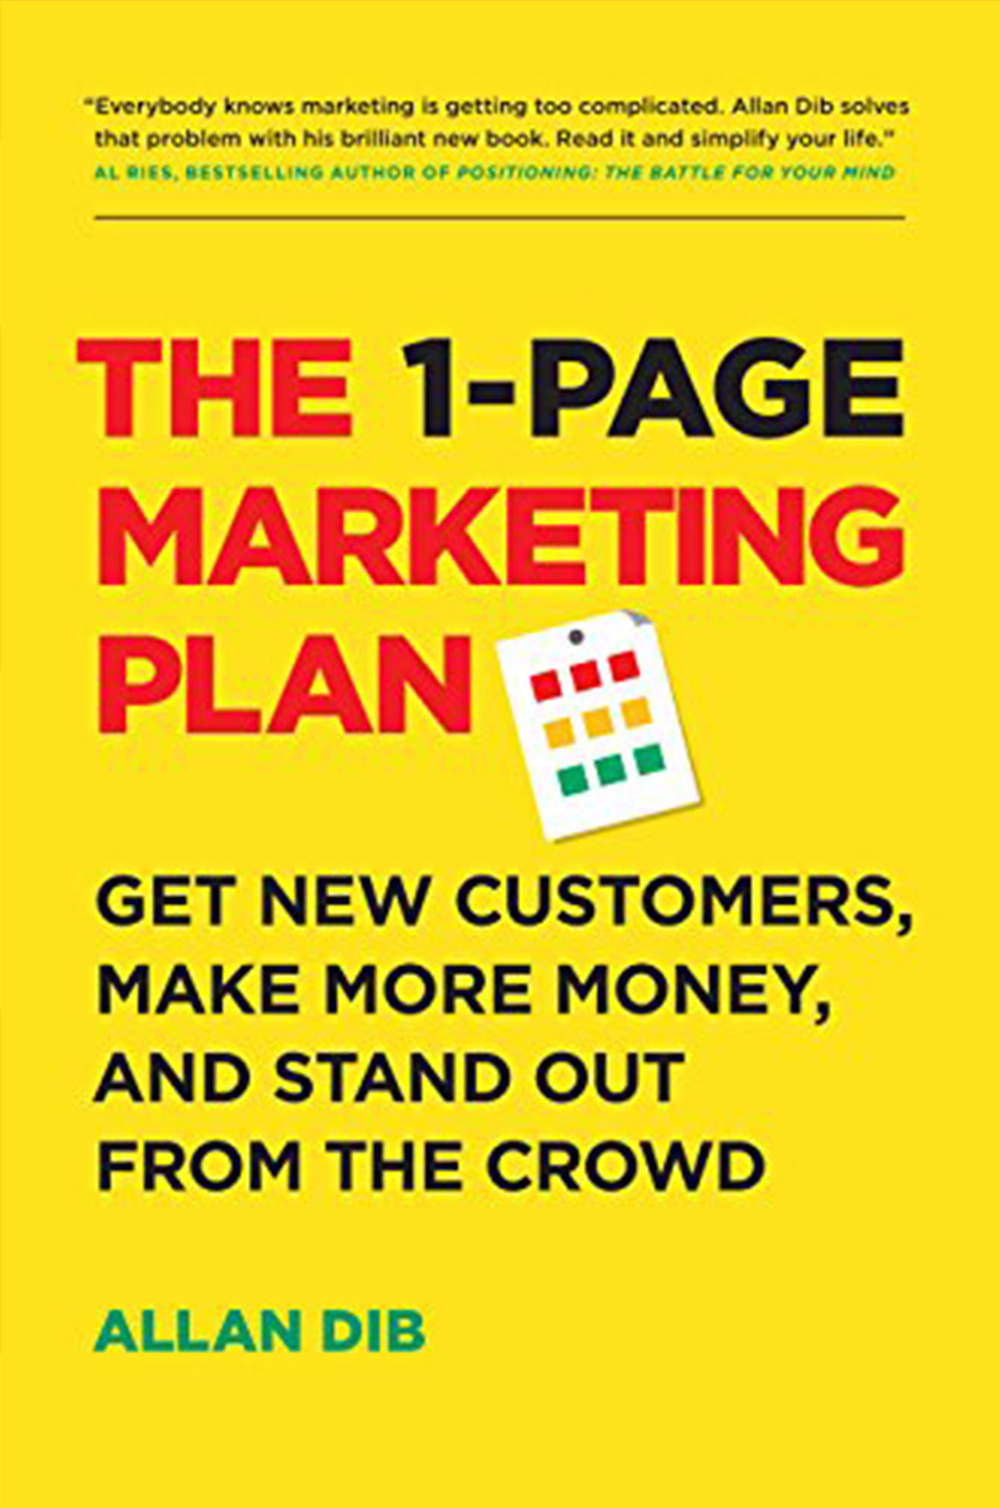 "The 1‑Page Marketing Plan" by Allan Dib